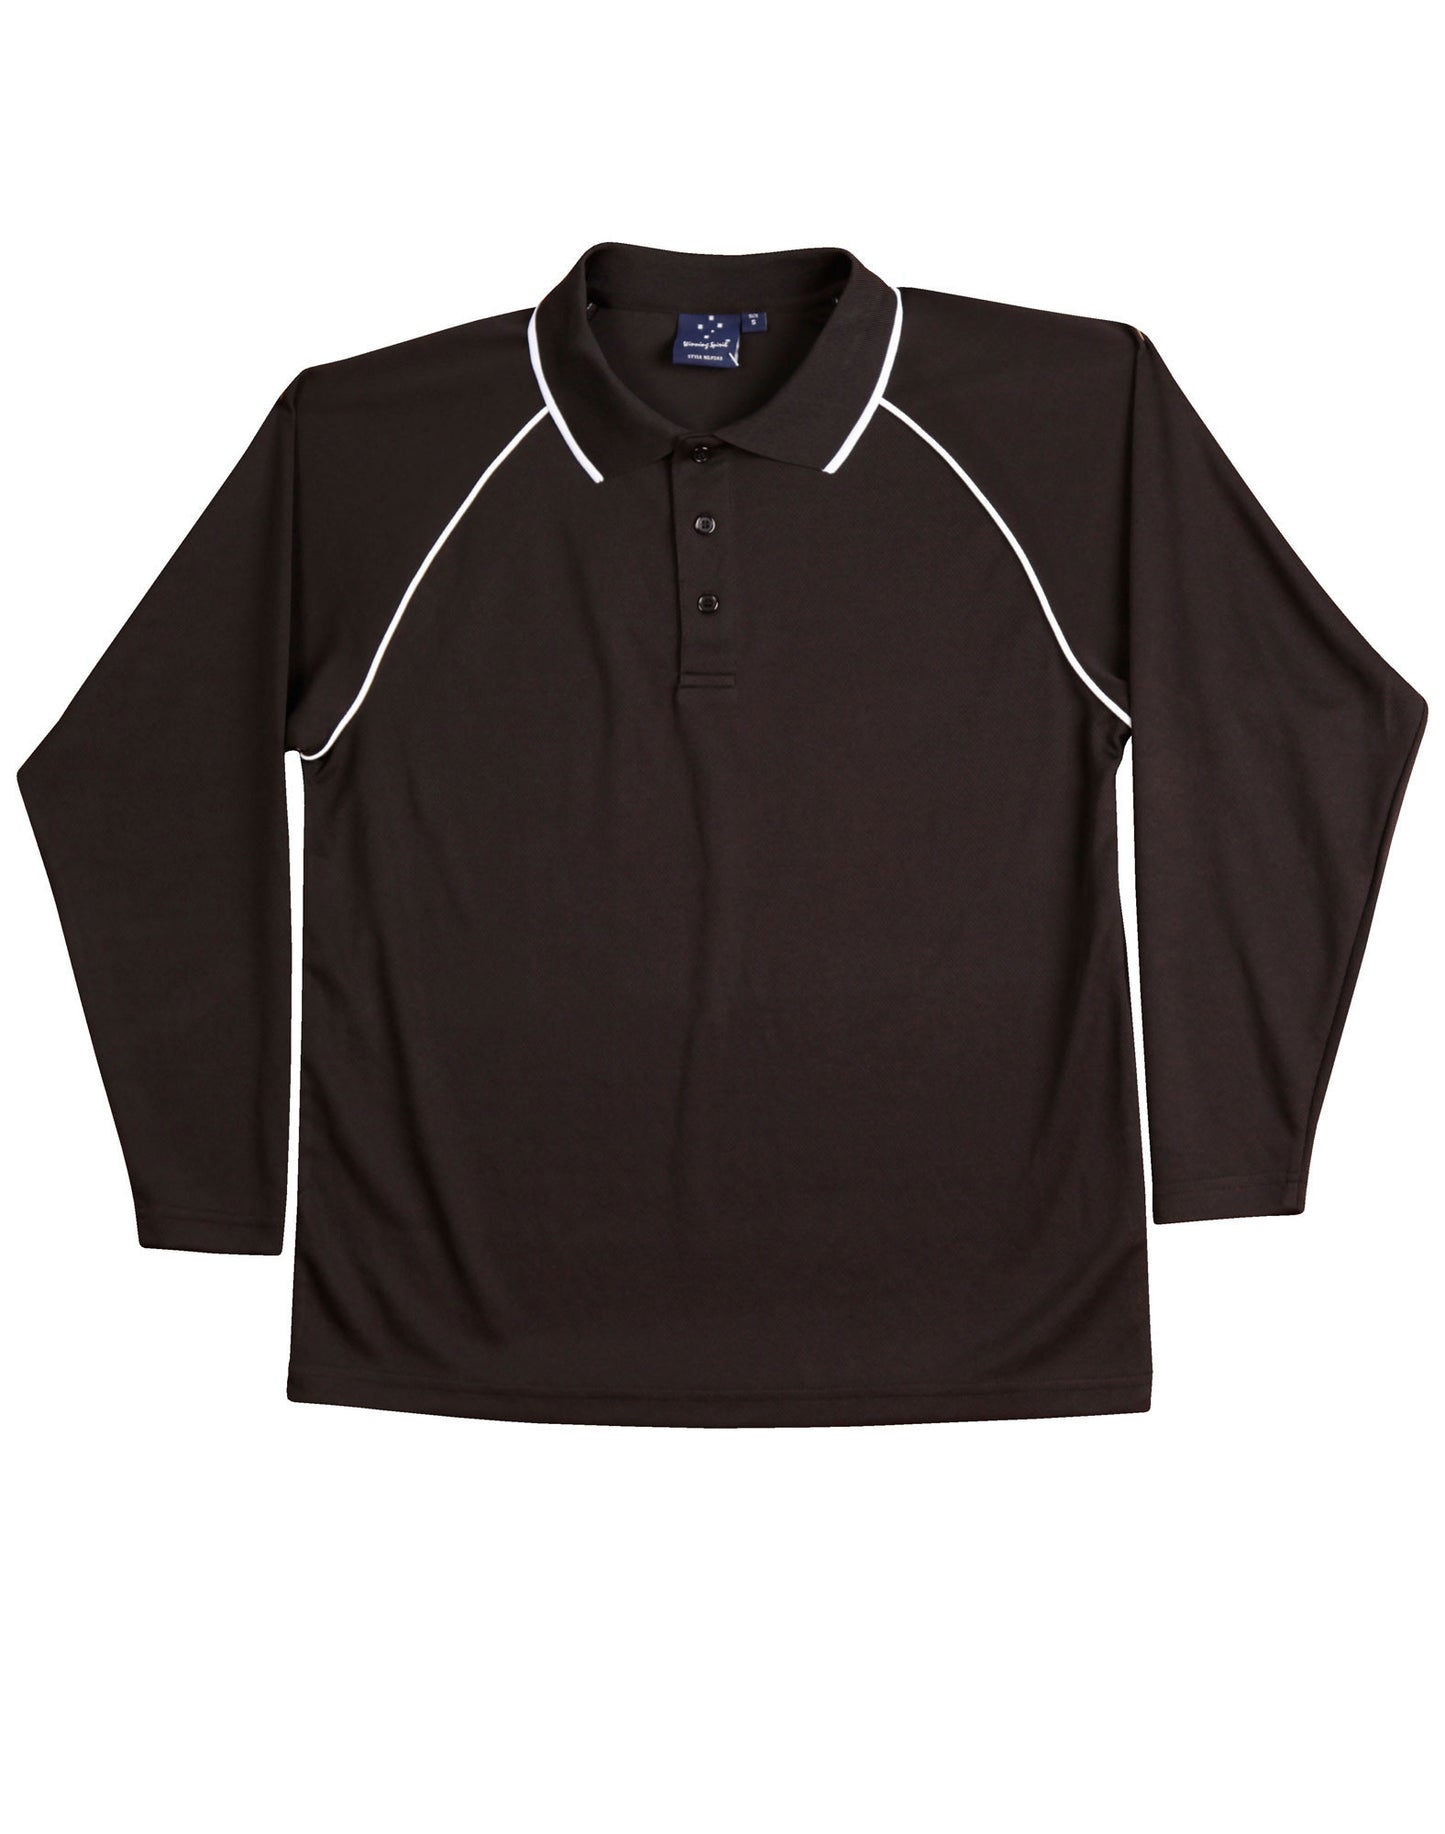 Winning Spirit Men's CoolDry® Raglan Long Sleeve Contrast Polo-(PS43)